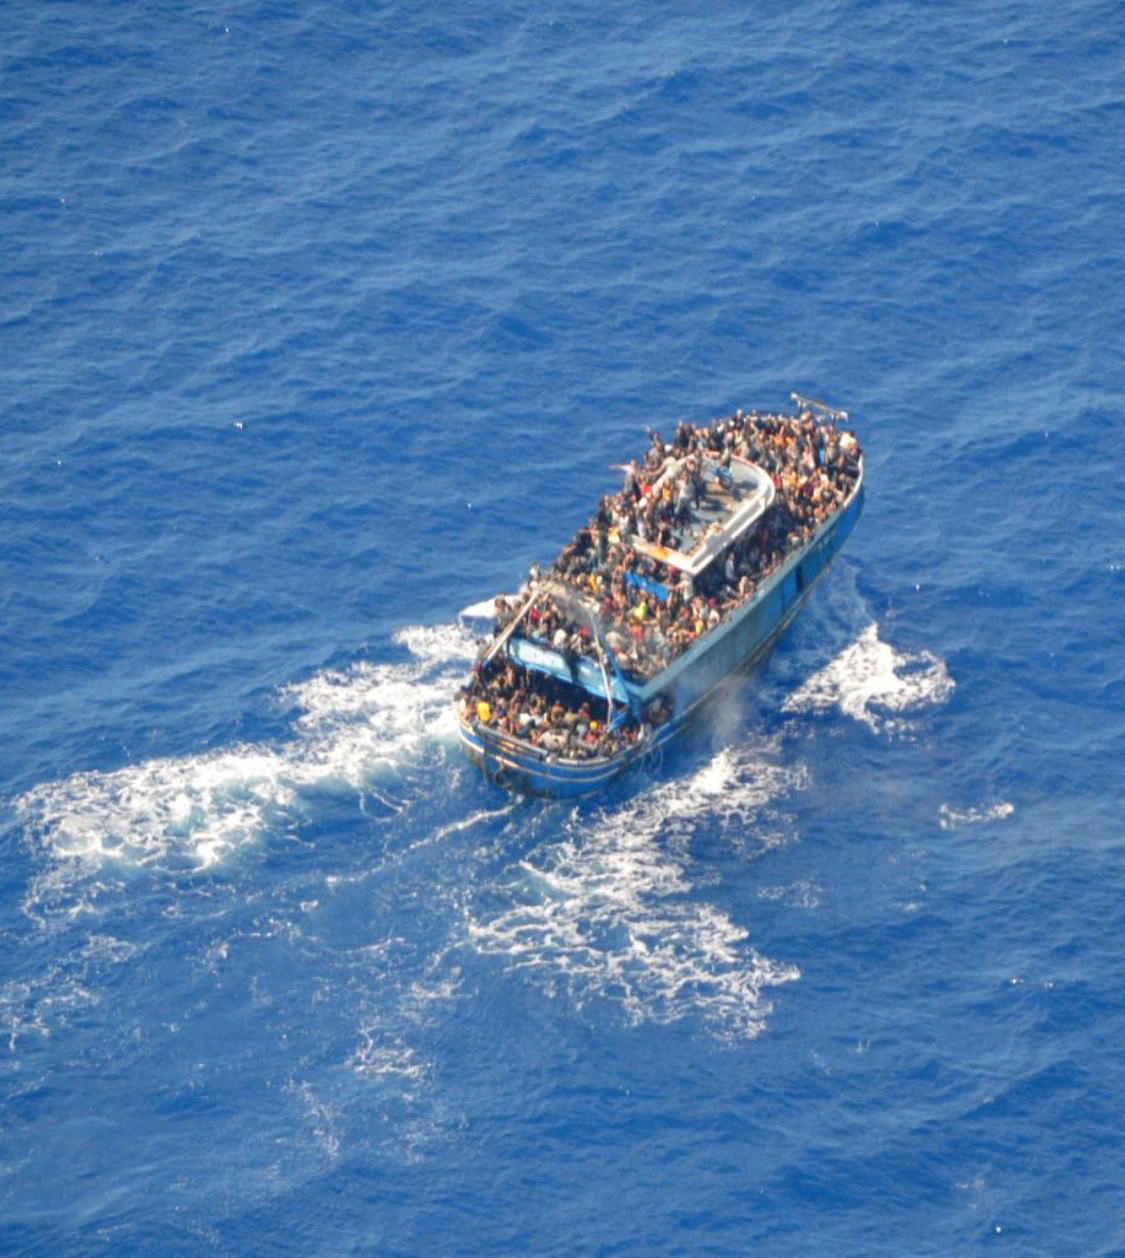 Greece migrant tragedy: coastguard rope capsized boat, survivor ...